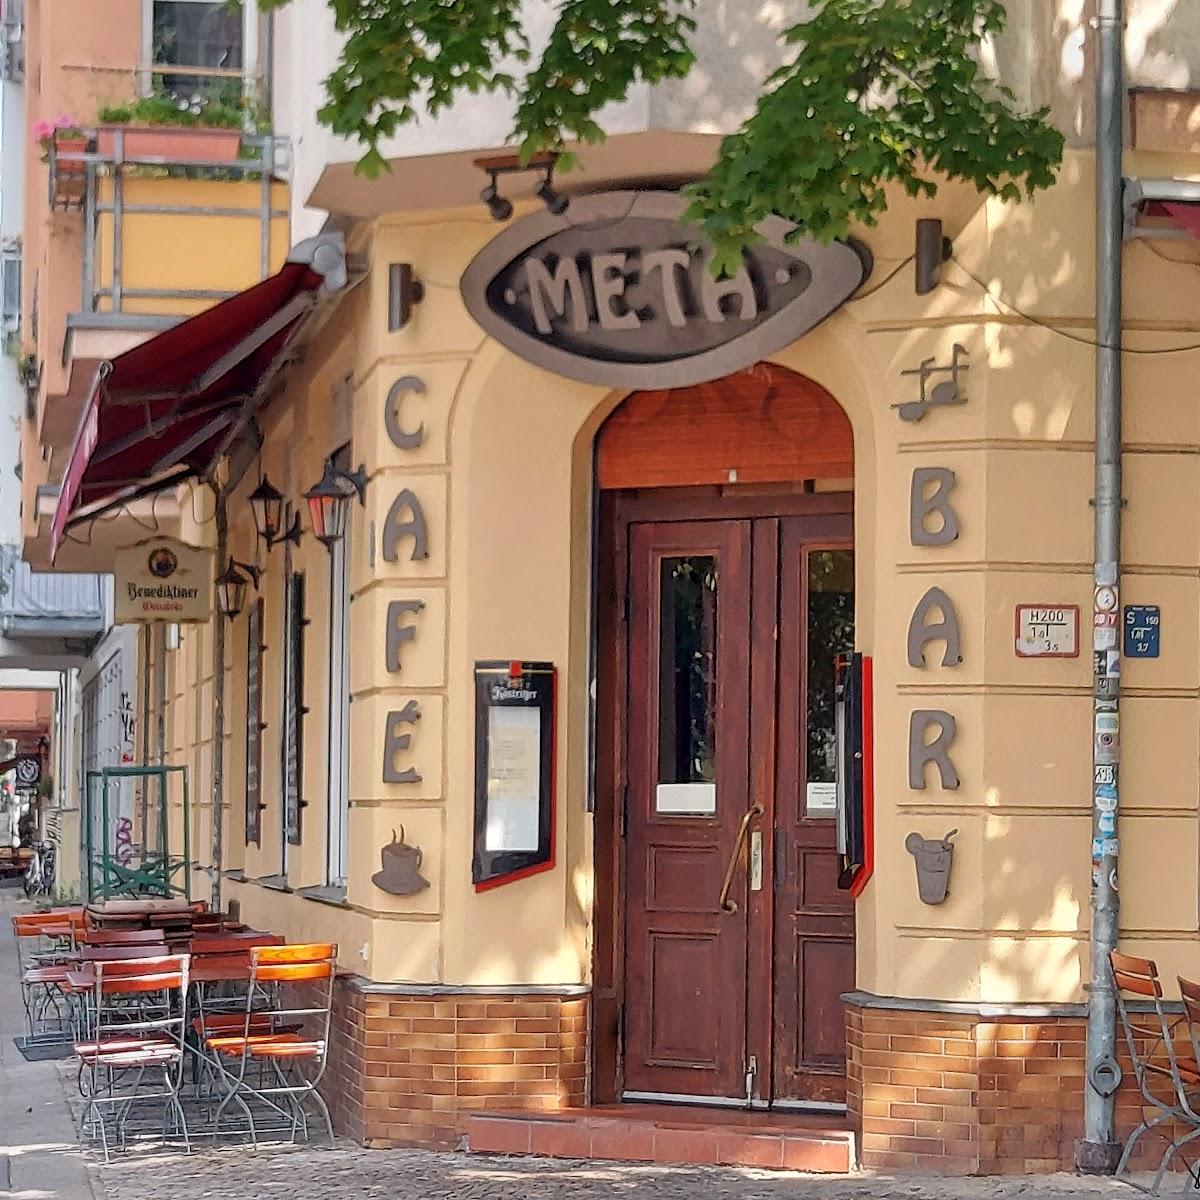 Restaurant "Café Meta" in Berlin